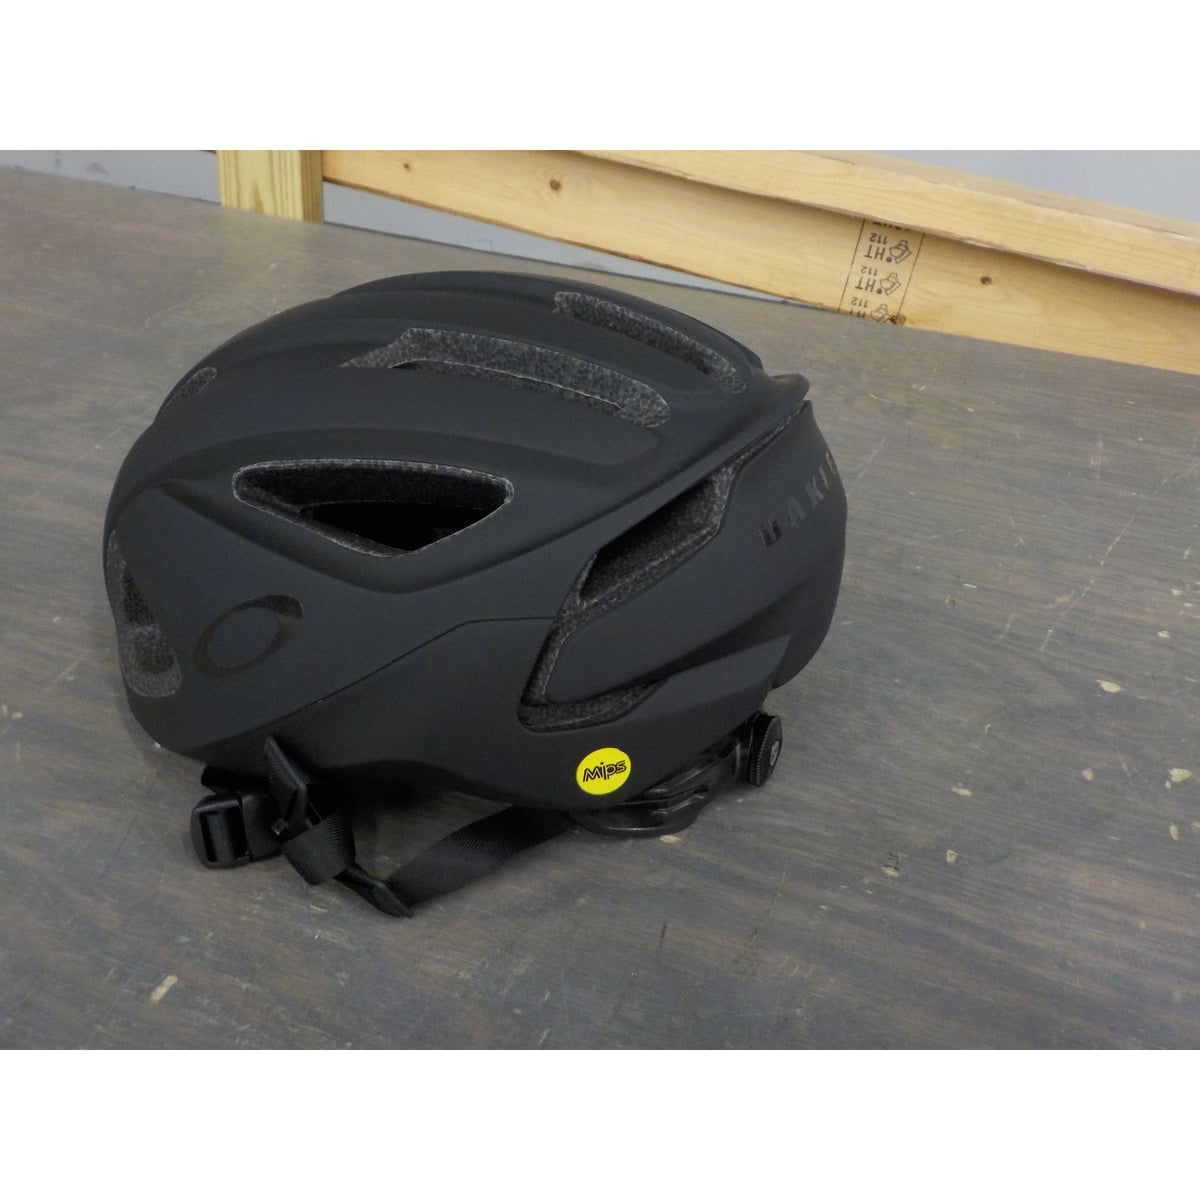 Oakley ARO3 Helmet - Blackout - Large - Used - Acceptable